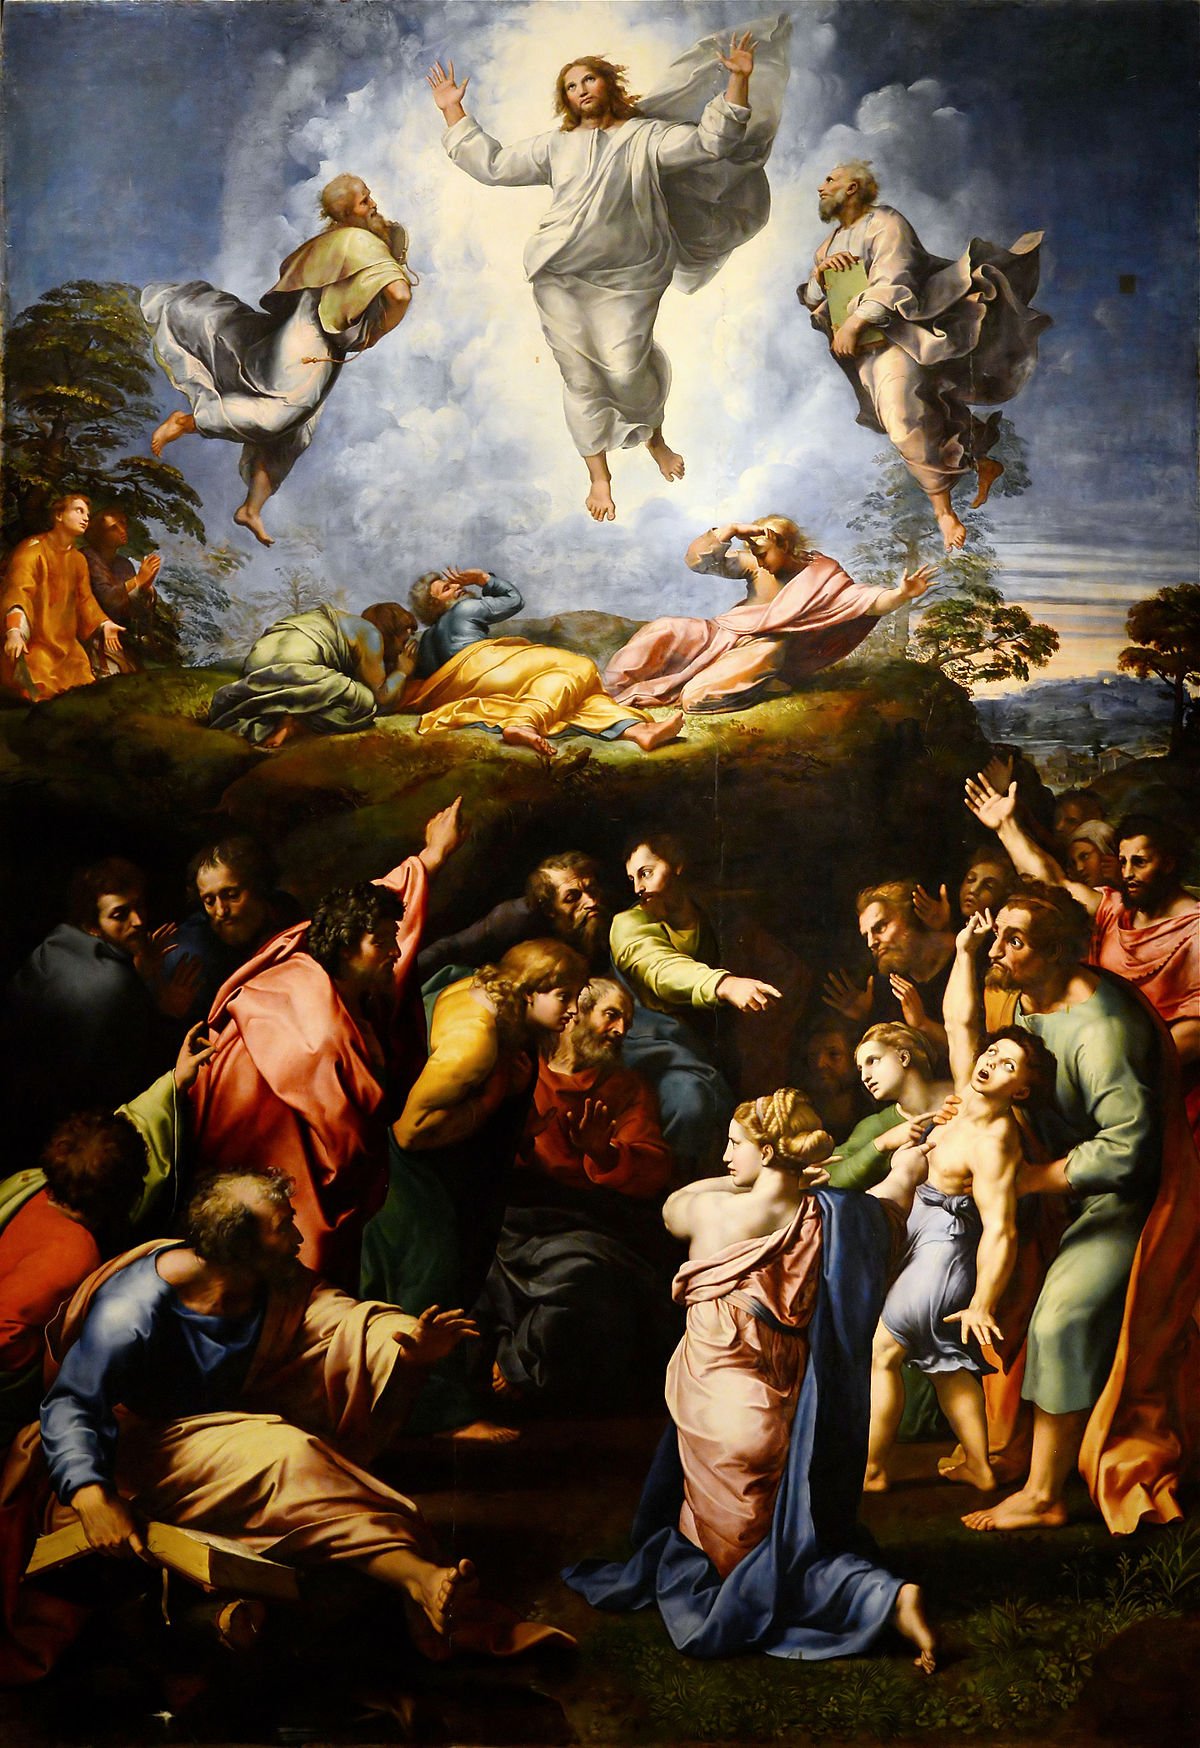 Raphael "The Transfiguration" (1516-1520)